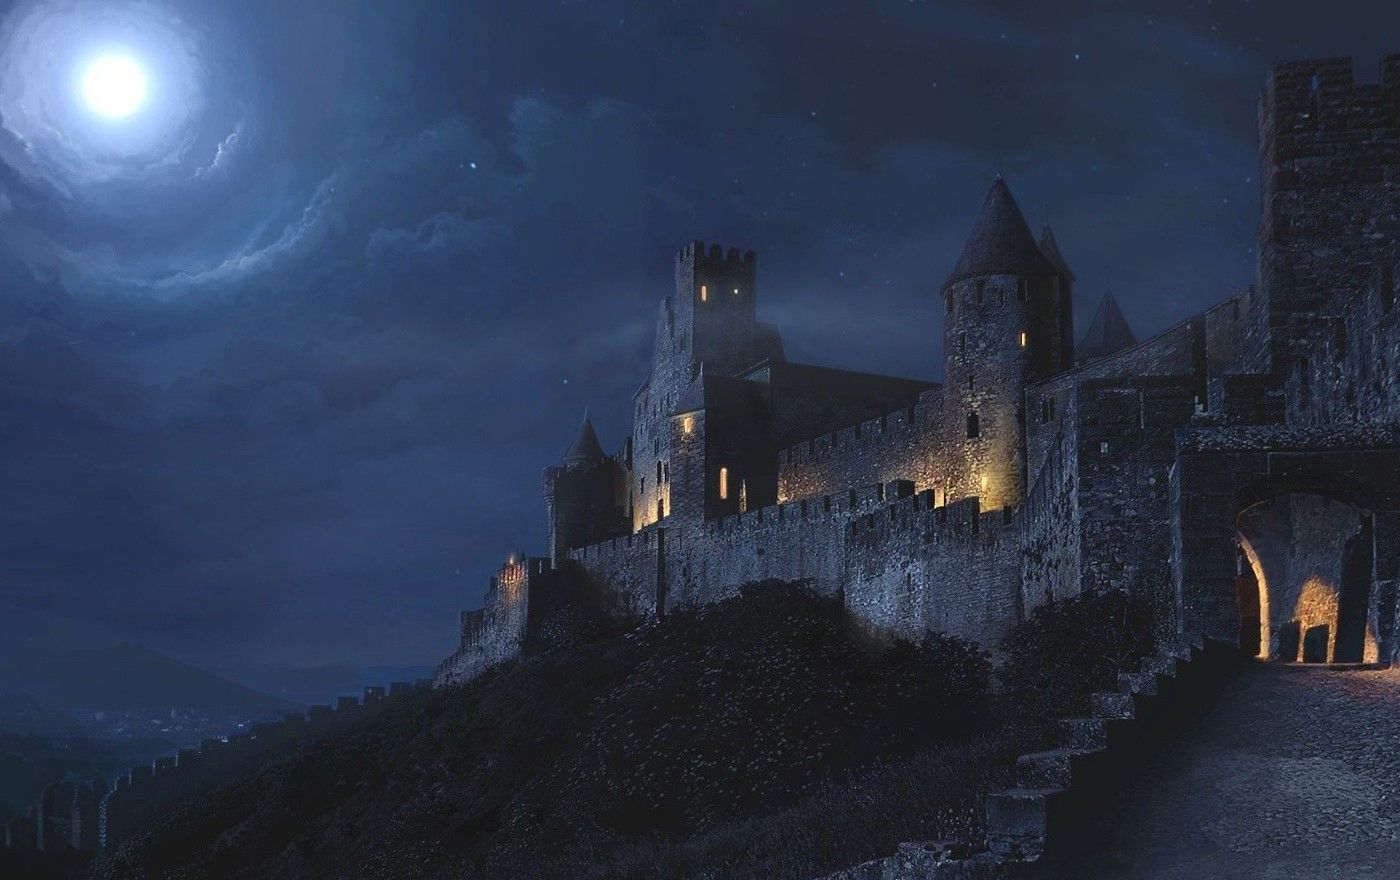 Night castle fantasy full moon. Castle illustration, Fantasy castle, Castle